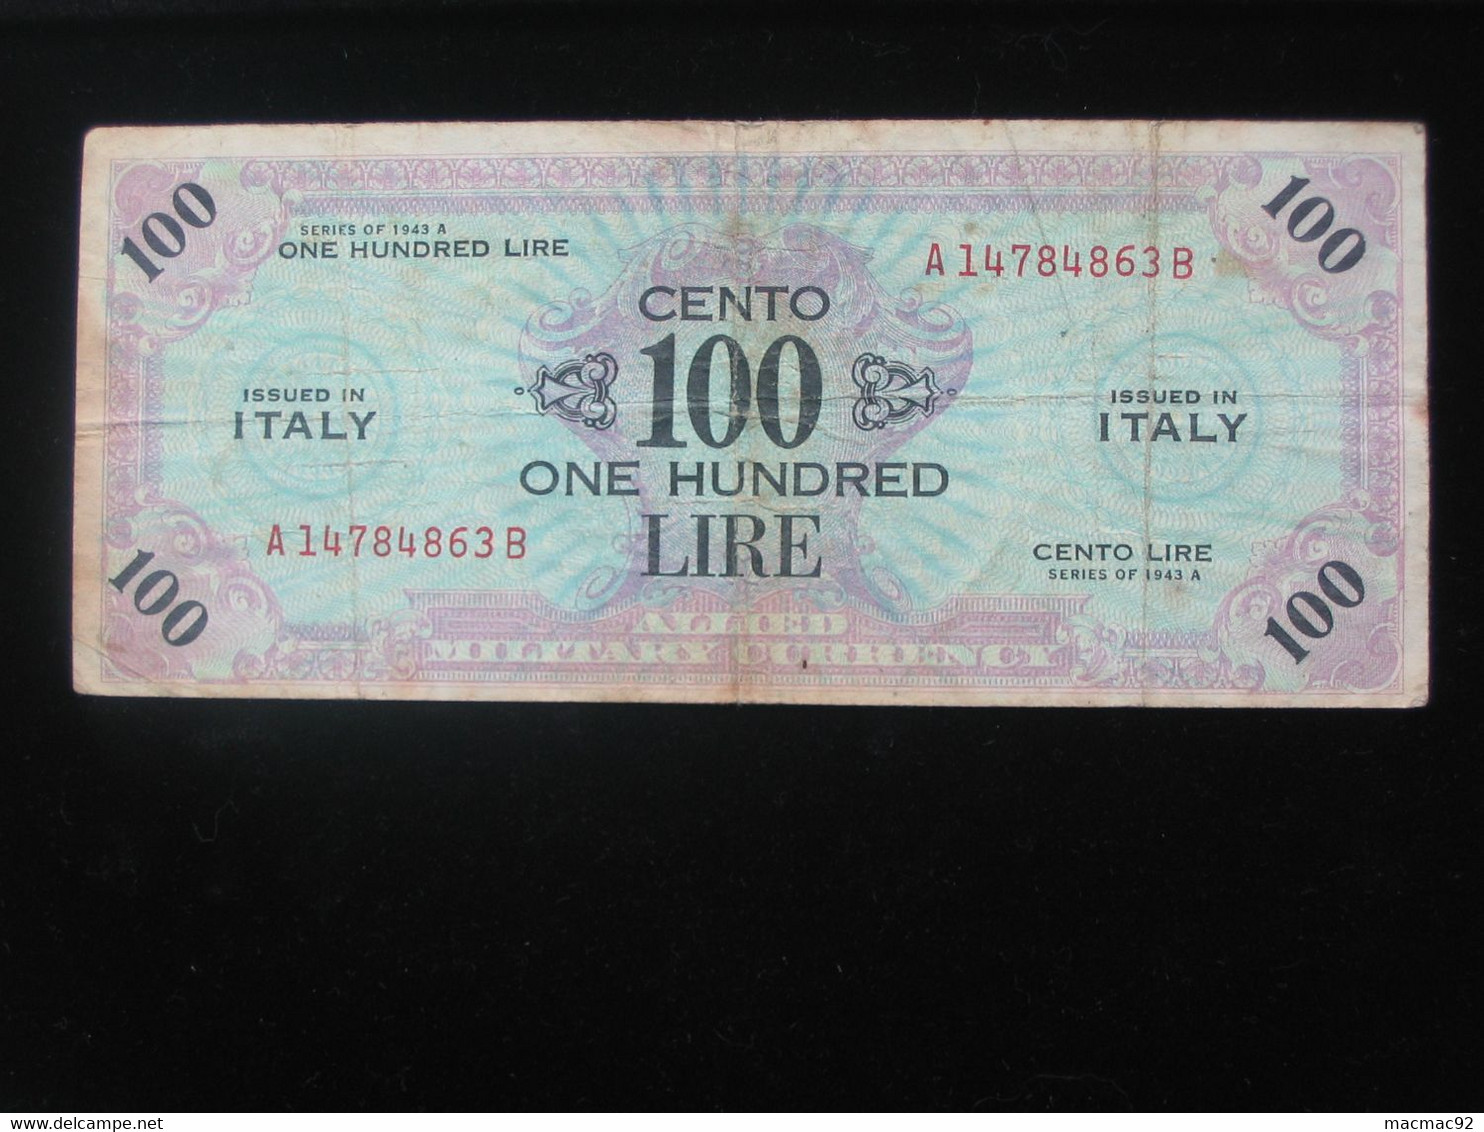 ITALIE 100 Cento One Hundred Lire 1943 - Allied Military Currency   **** EN ACHAT IMMEDIAT **** - 2. WK - Alliierte Besatzung